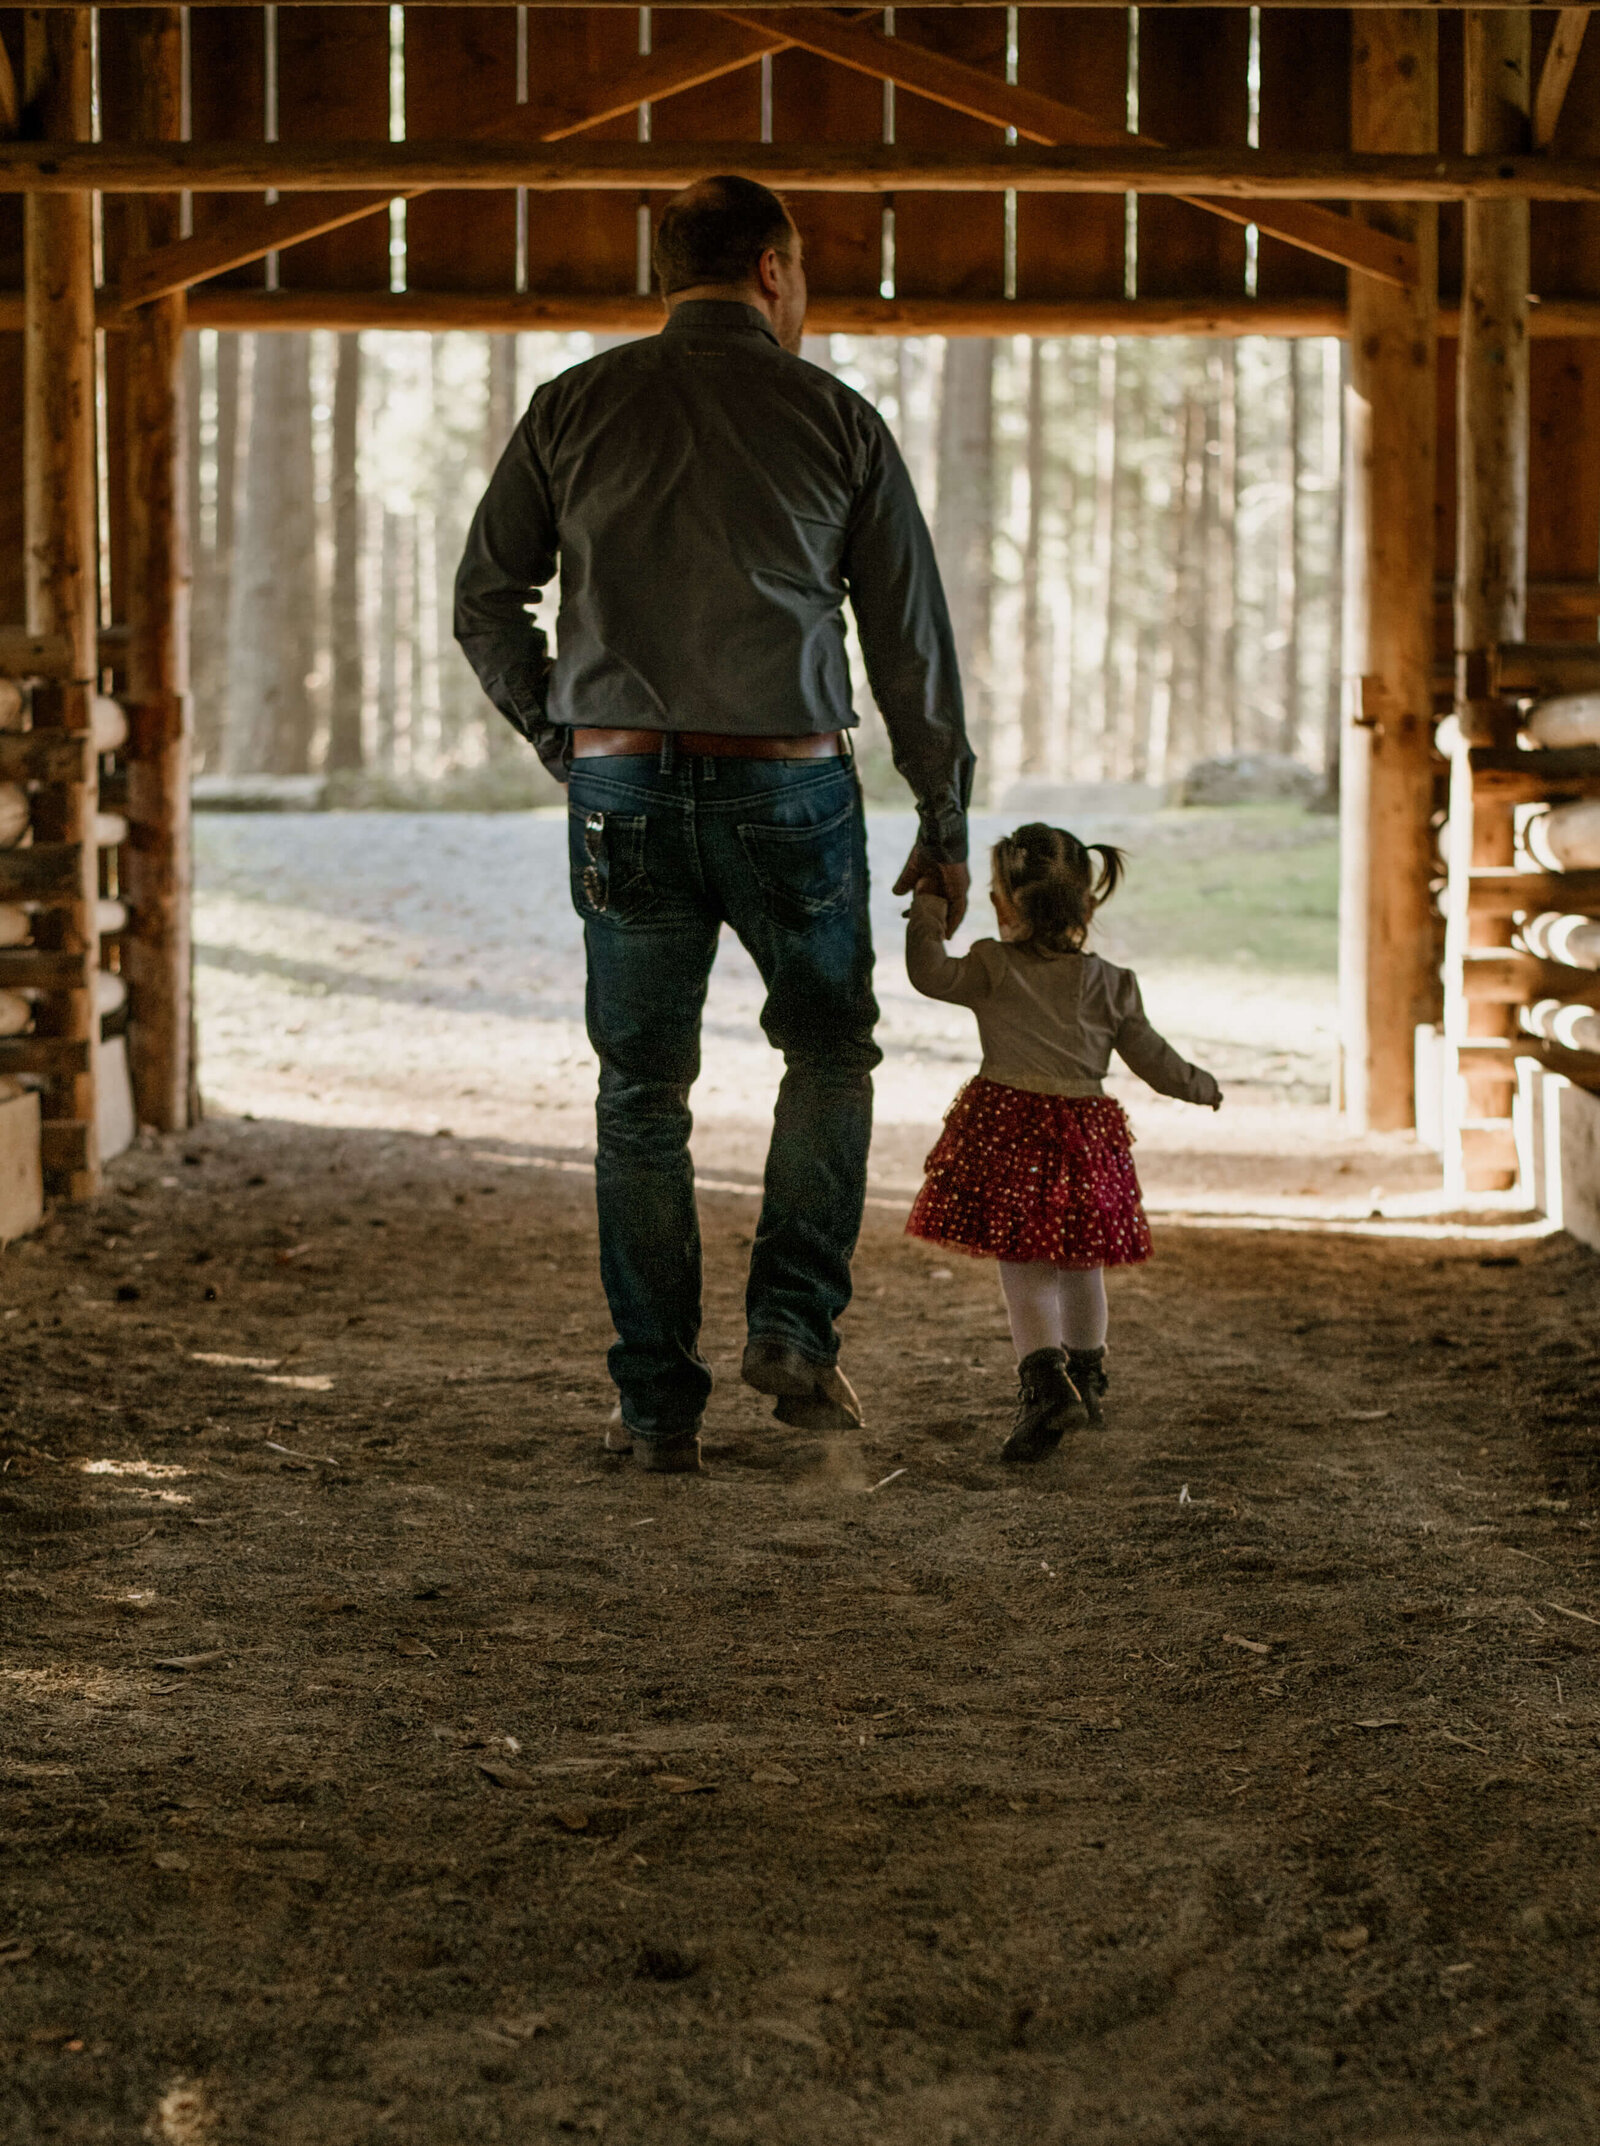 Grandpa and little girl walking through a barn.